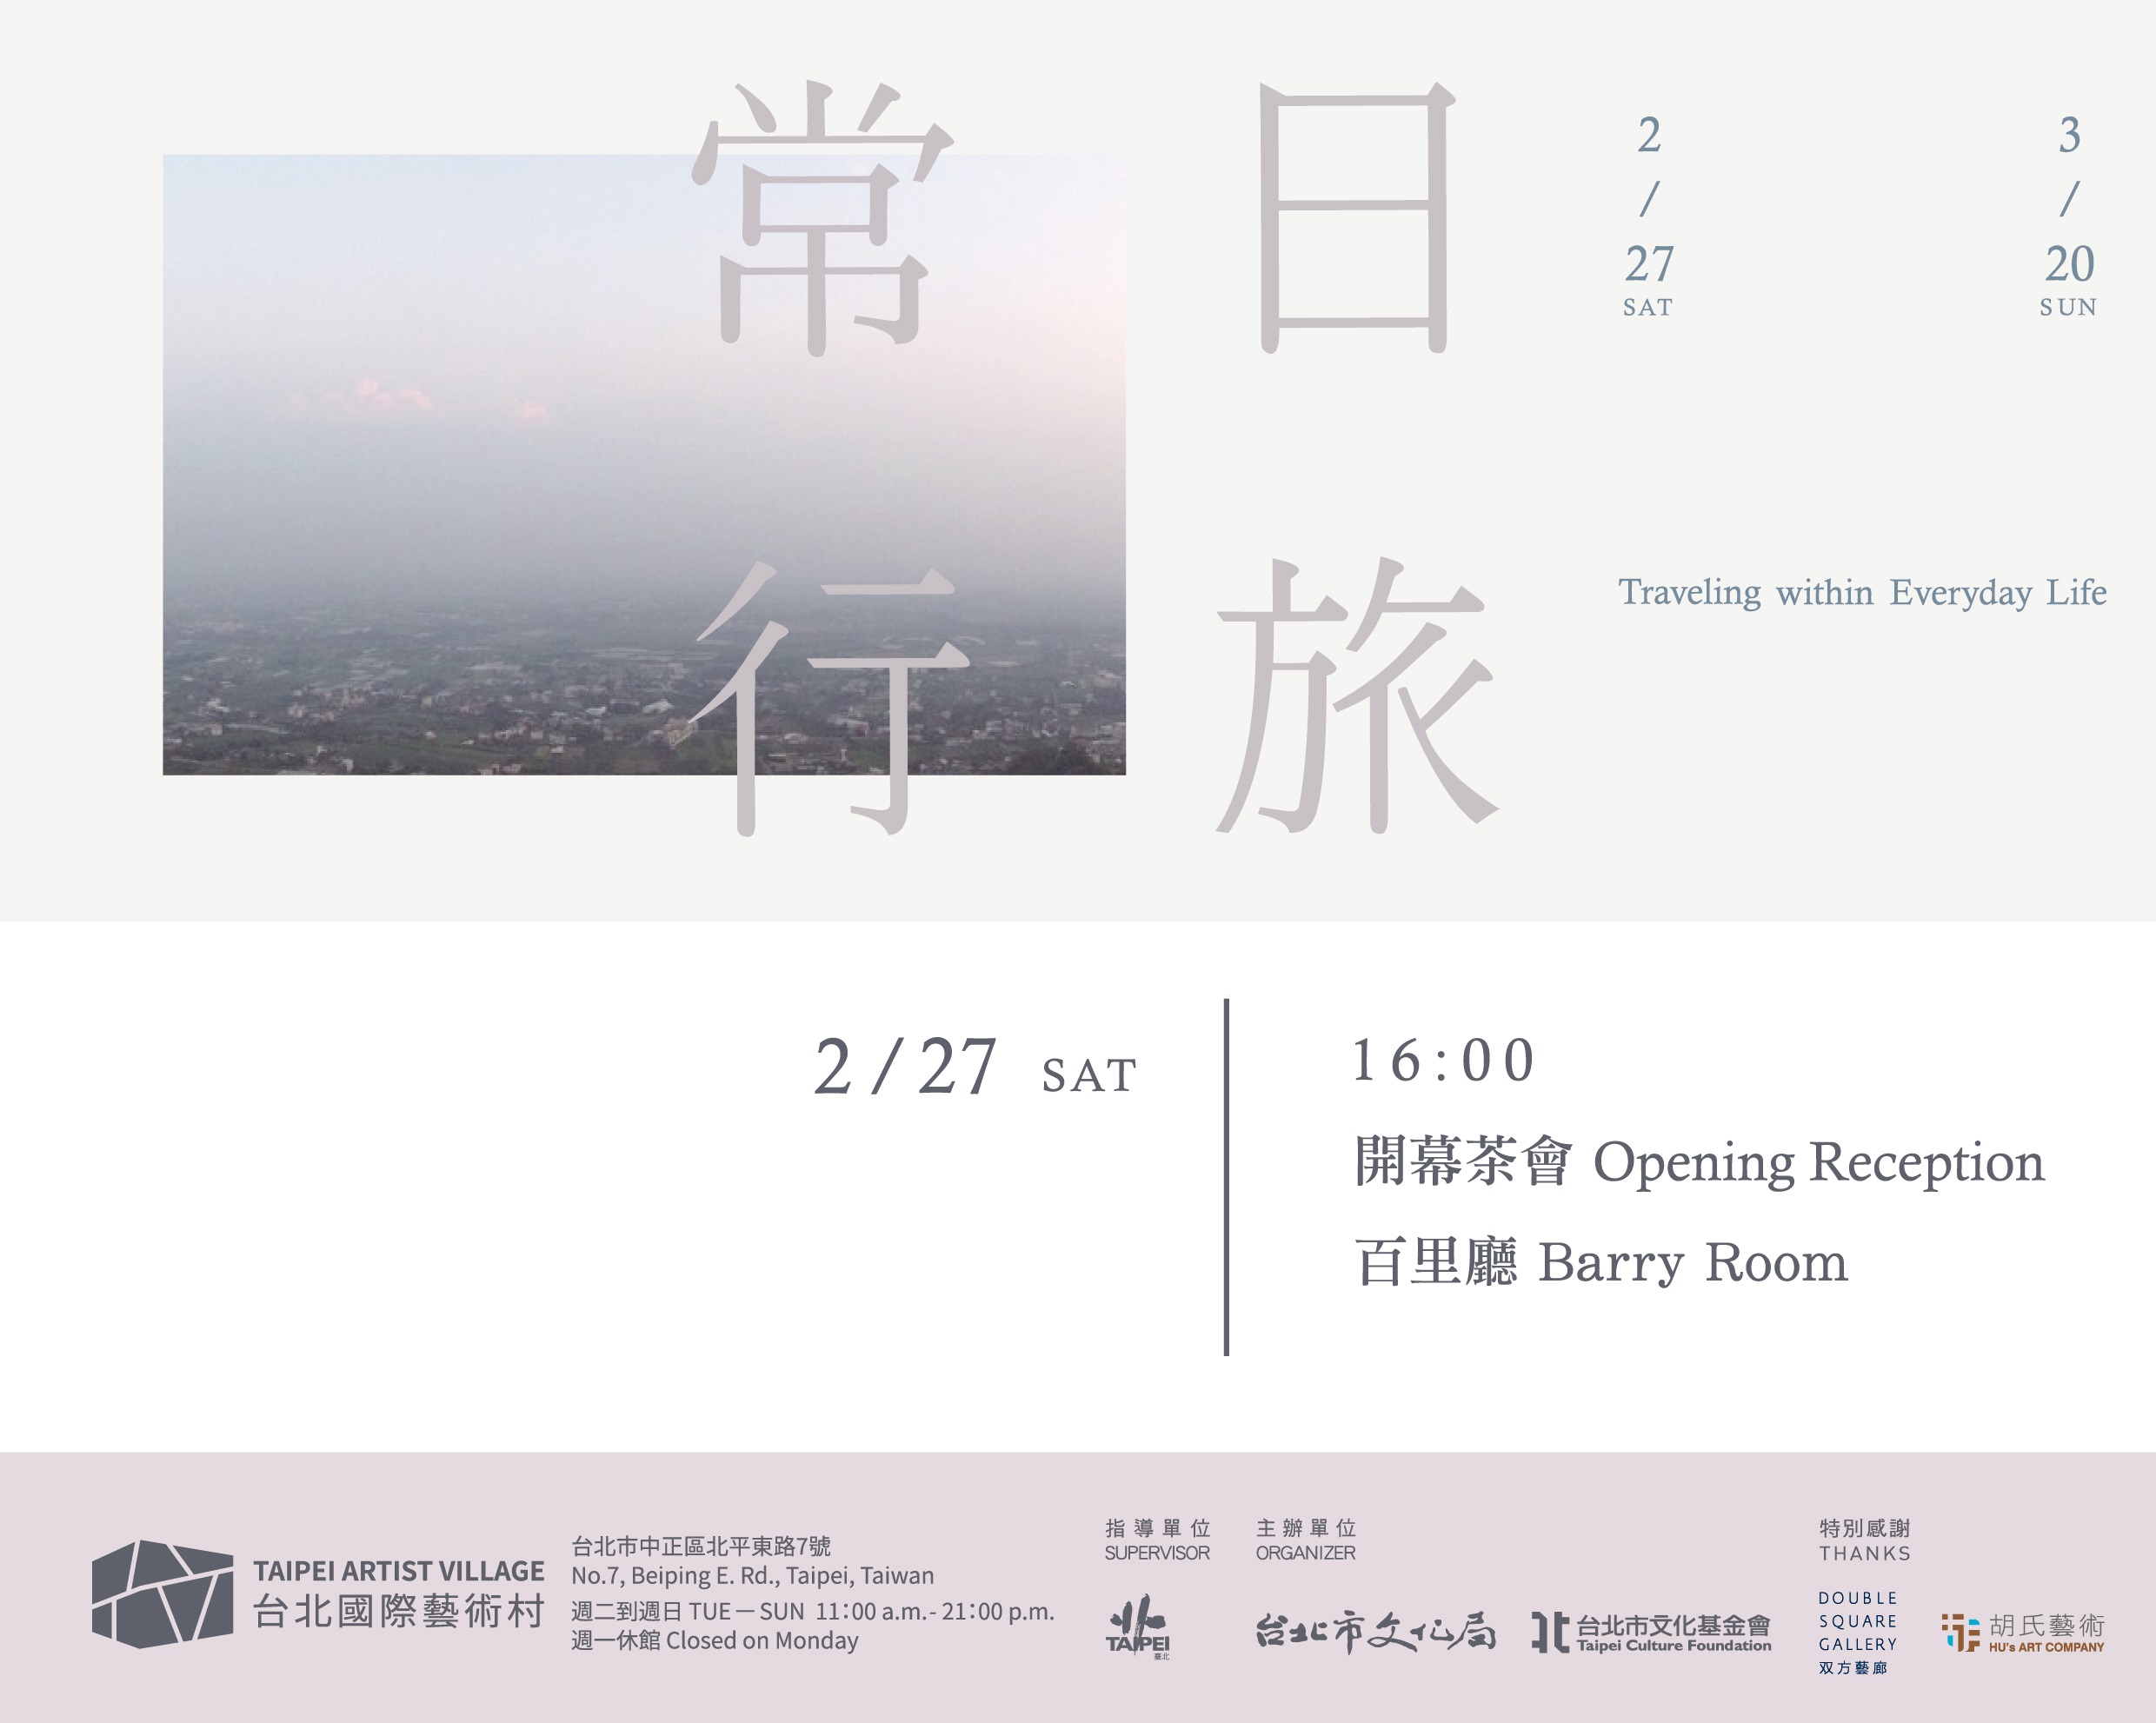 TAV exhibition invite. 27 February 2016